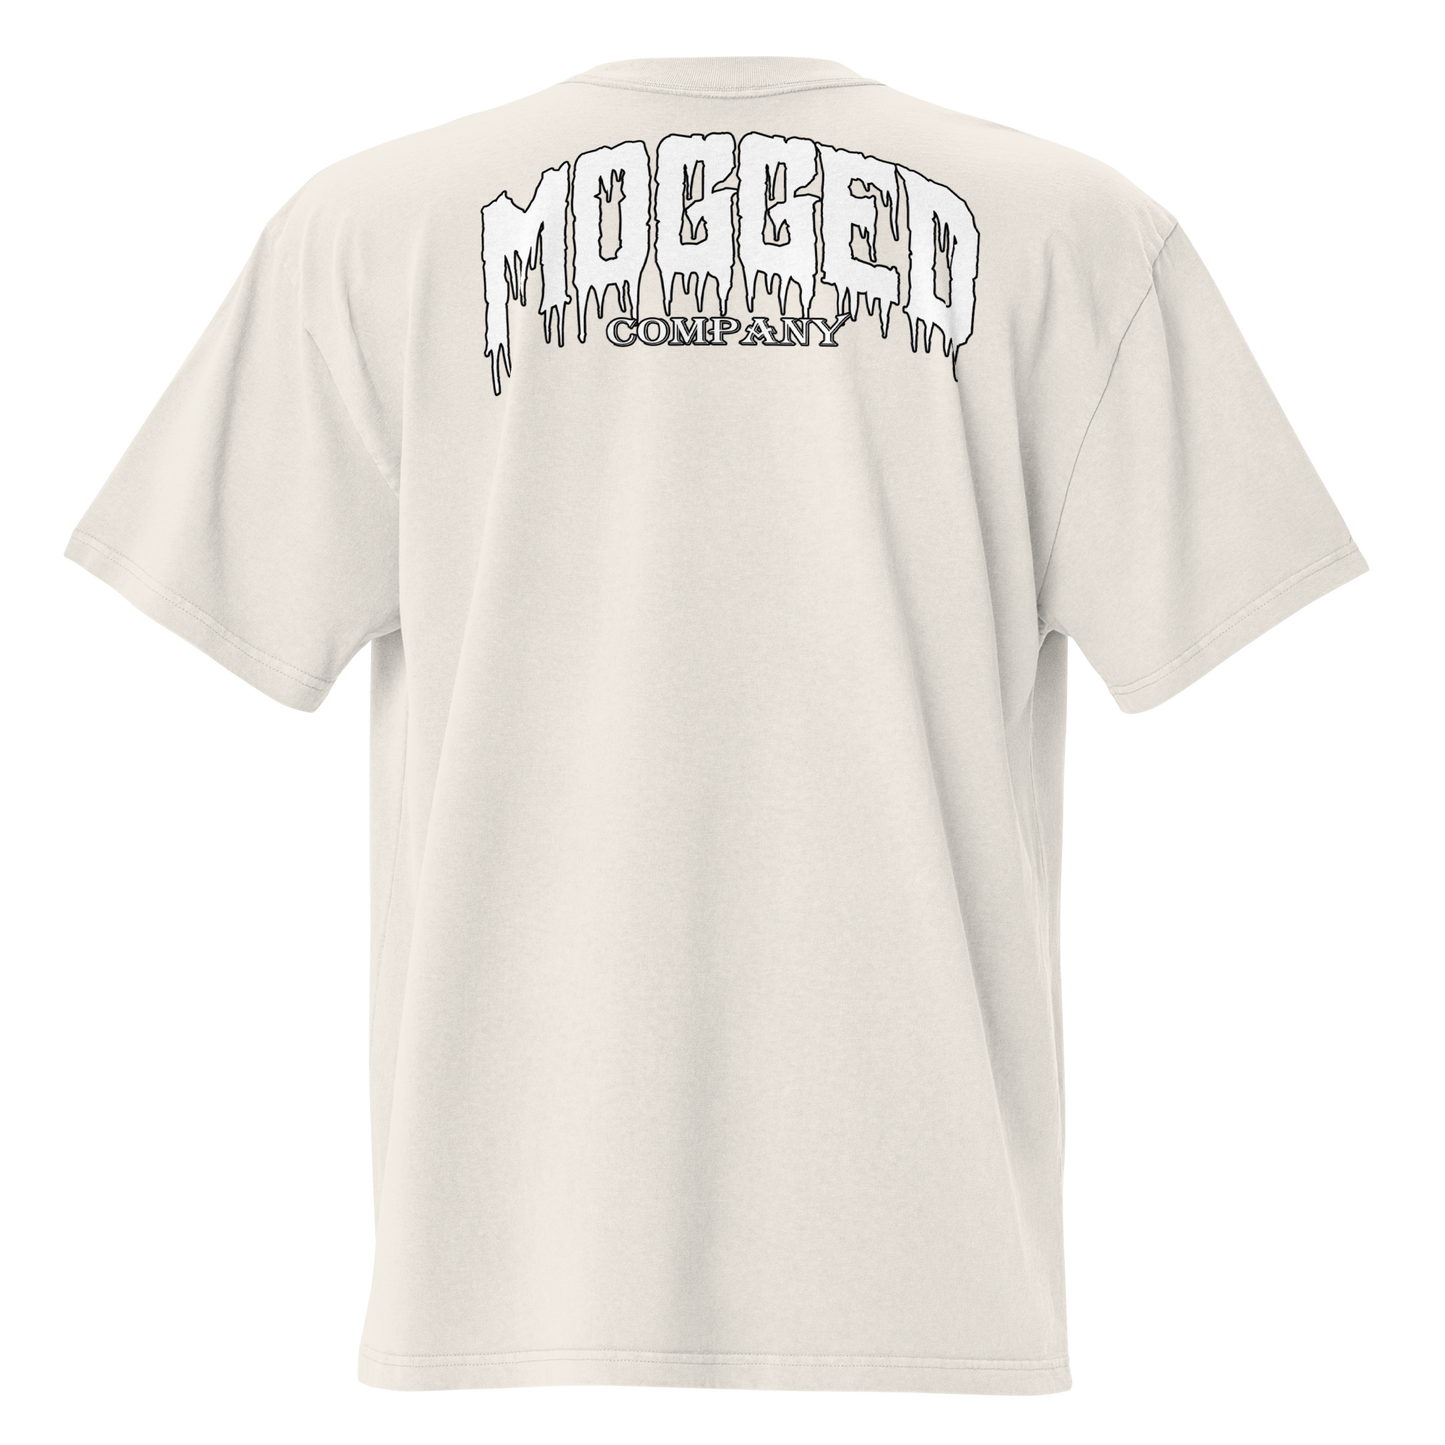 OG - Oversized faded Mogged Shirt